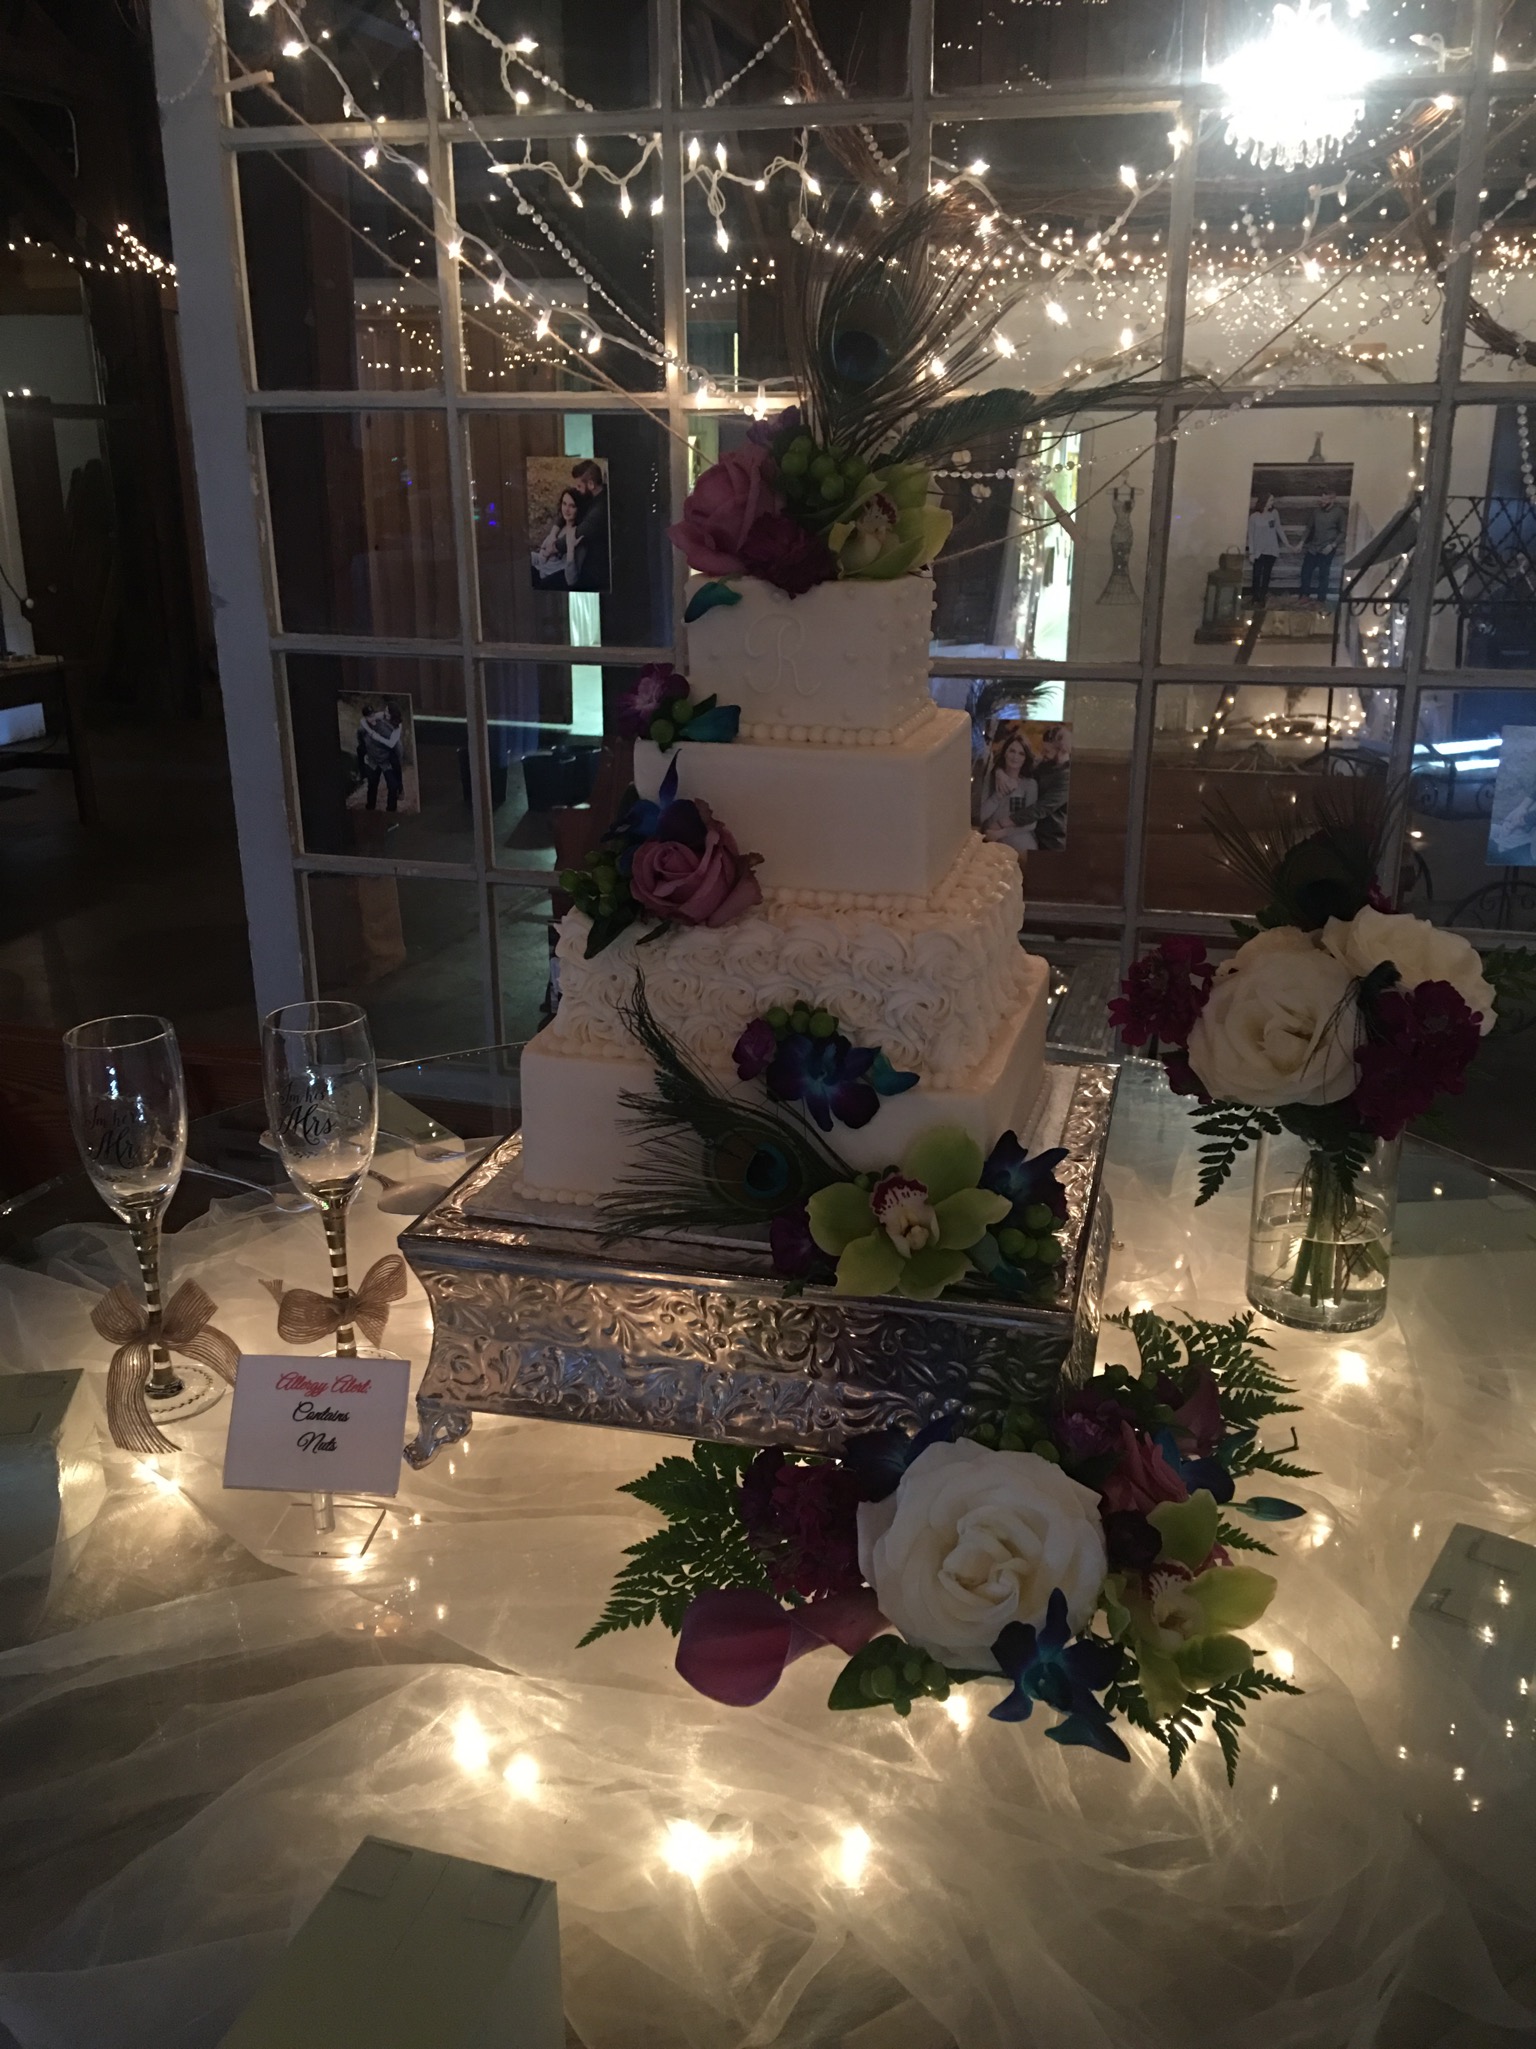 Beautiful wedding cake with window backdrop